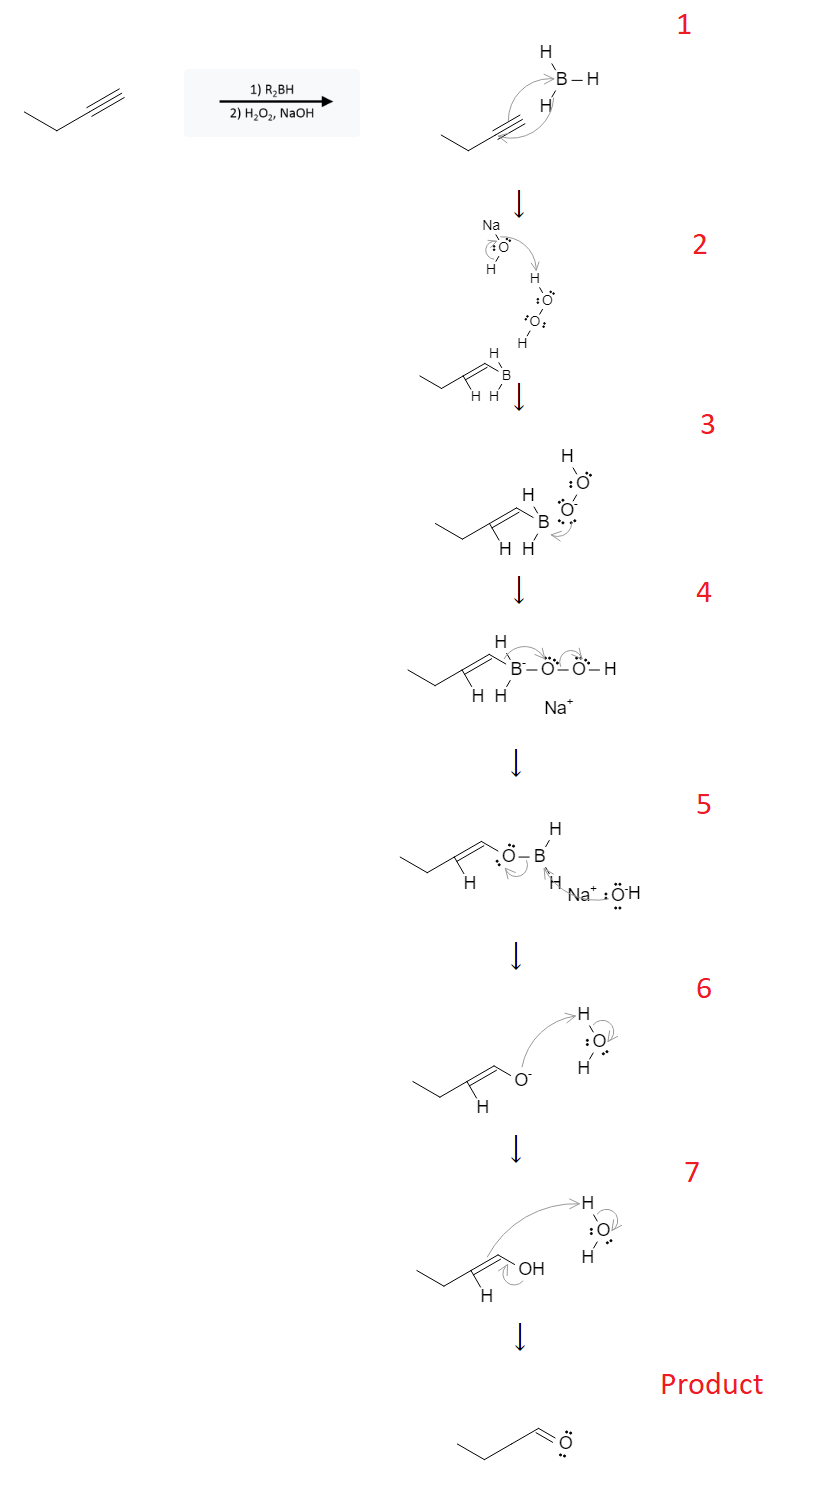 Alkyne Reactions: Alkyne Hydroboration using BH3, NaOH, H2O2 image3.png